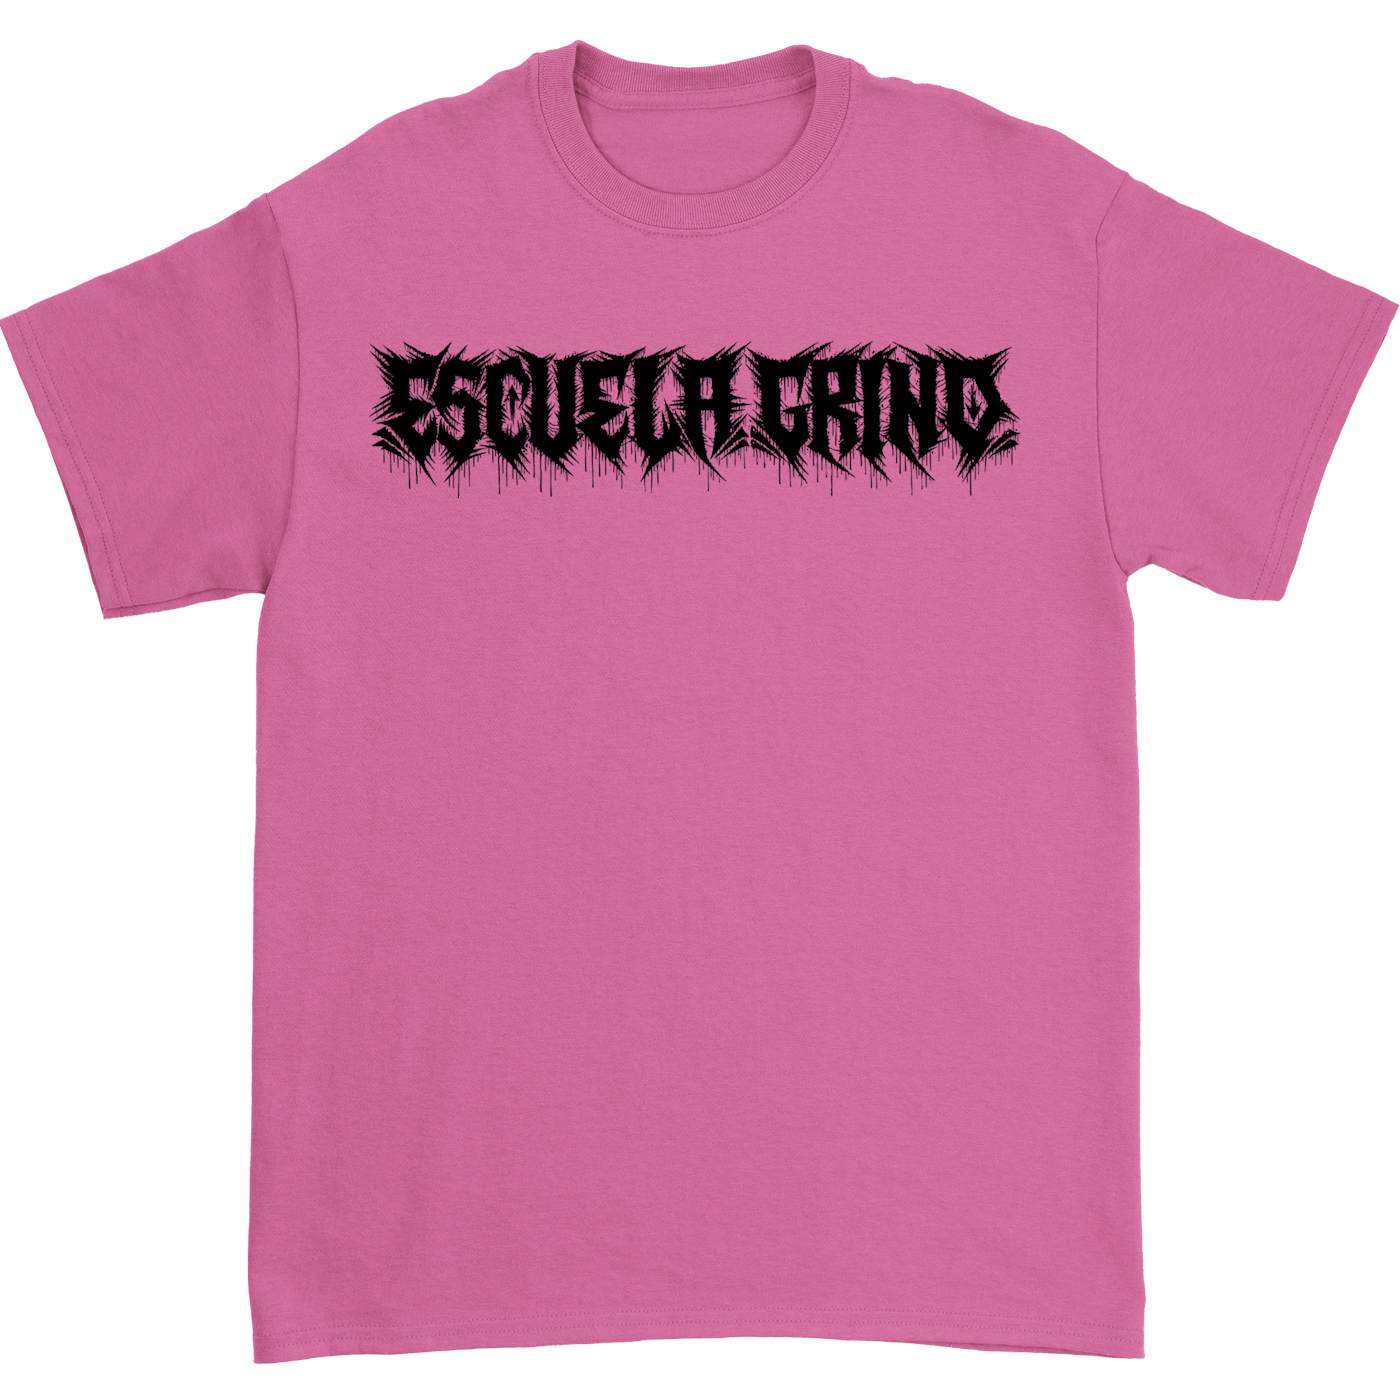 Escuela Grind - Logo T-Shirt - Pink